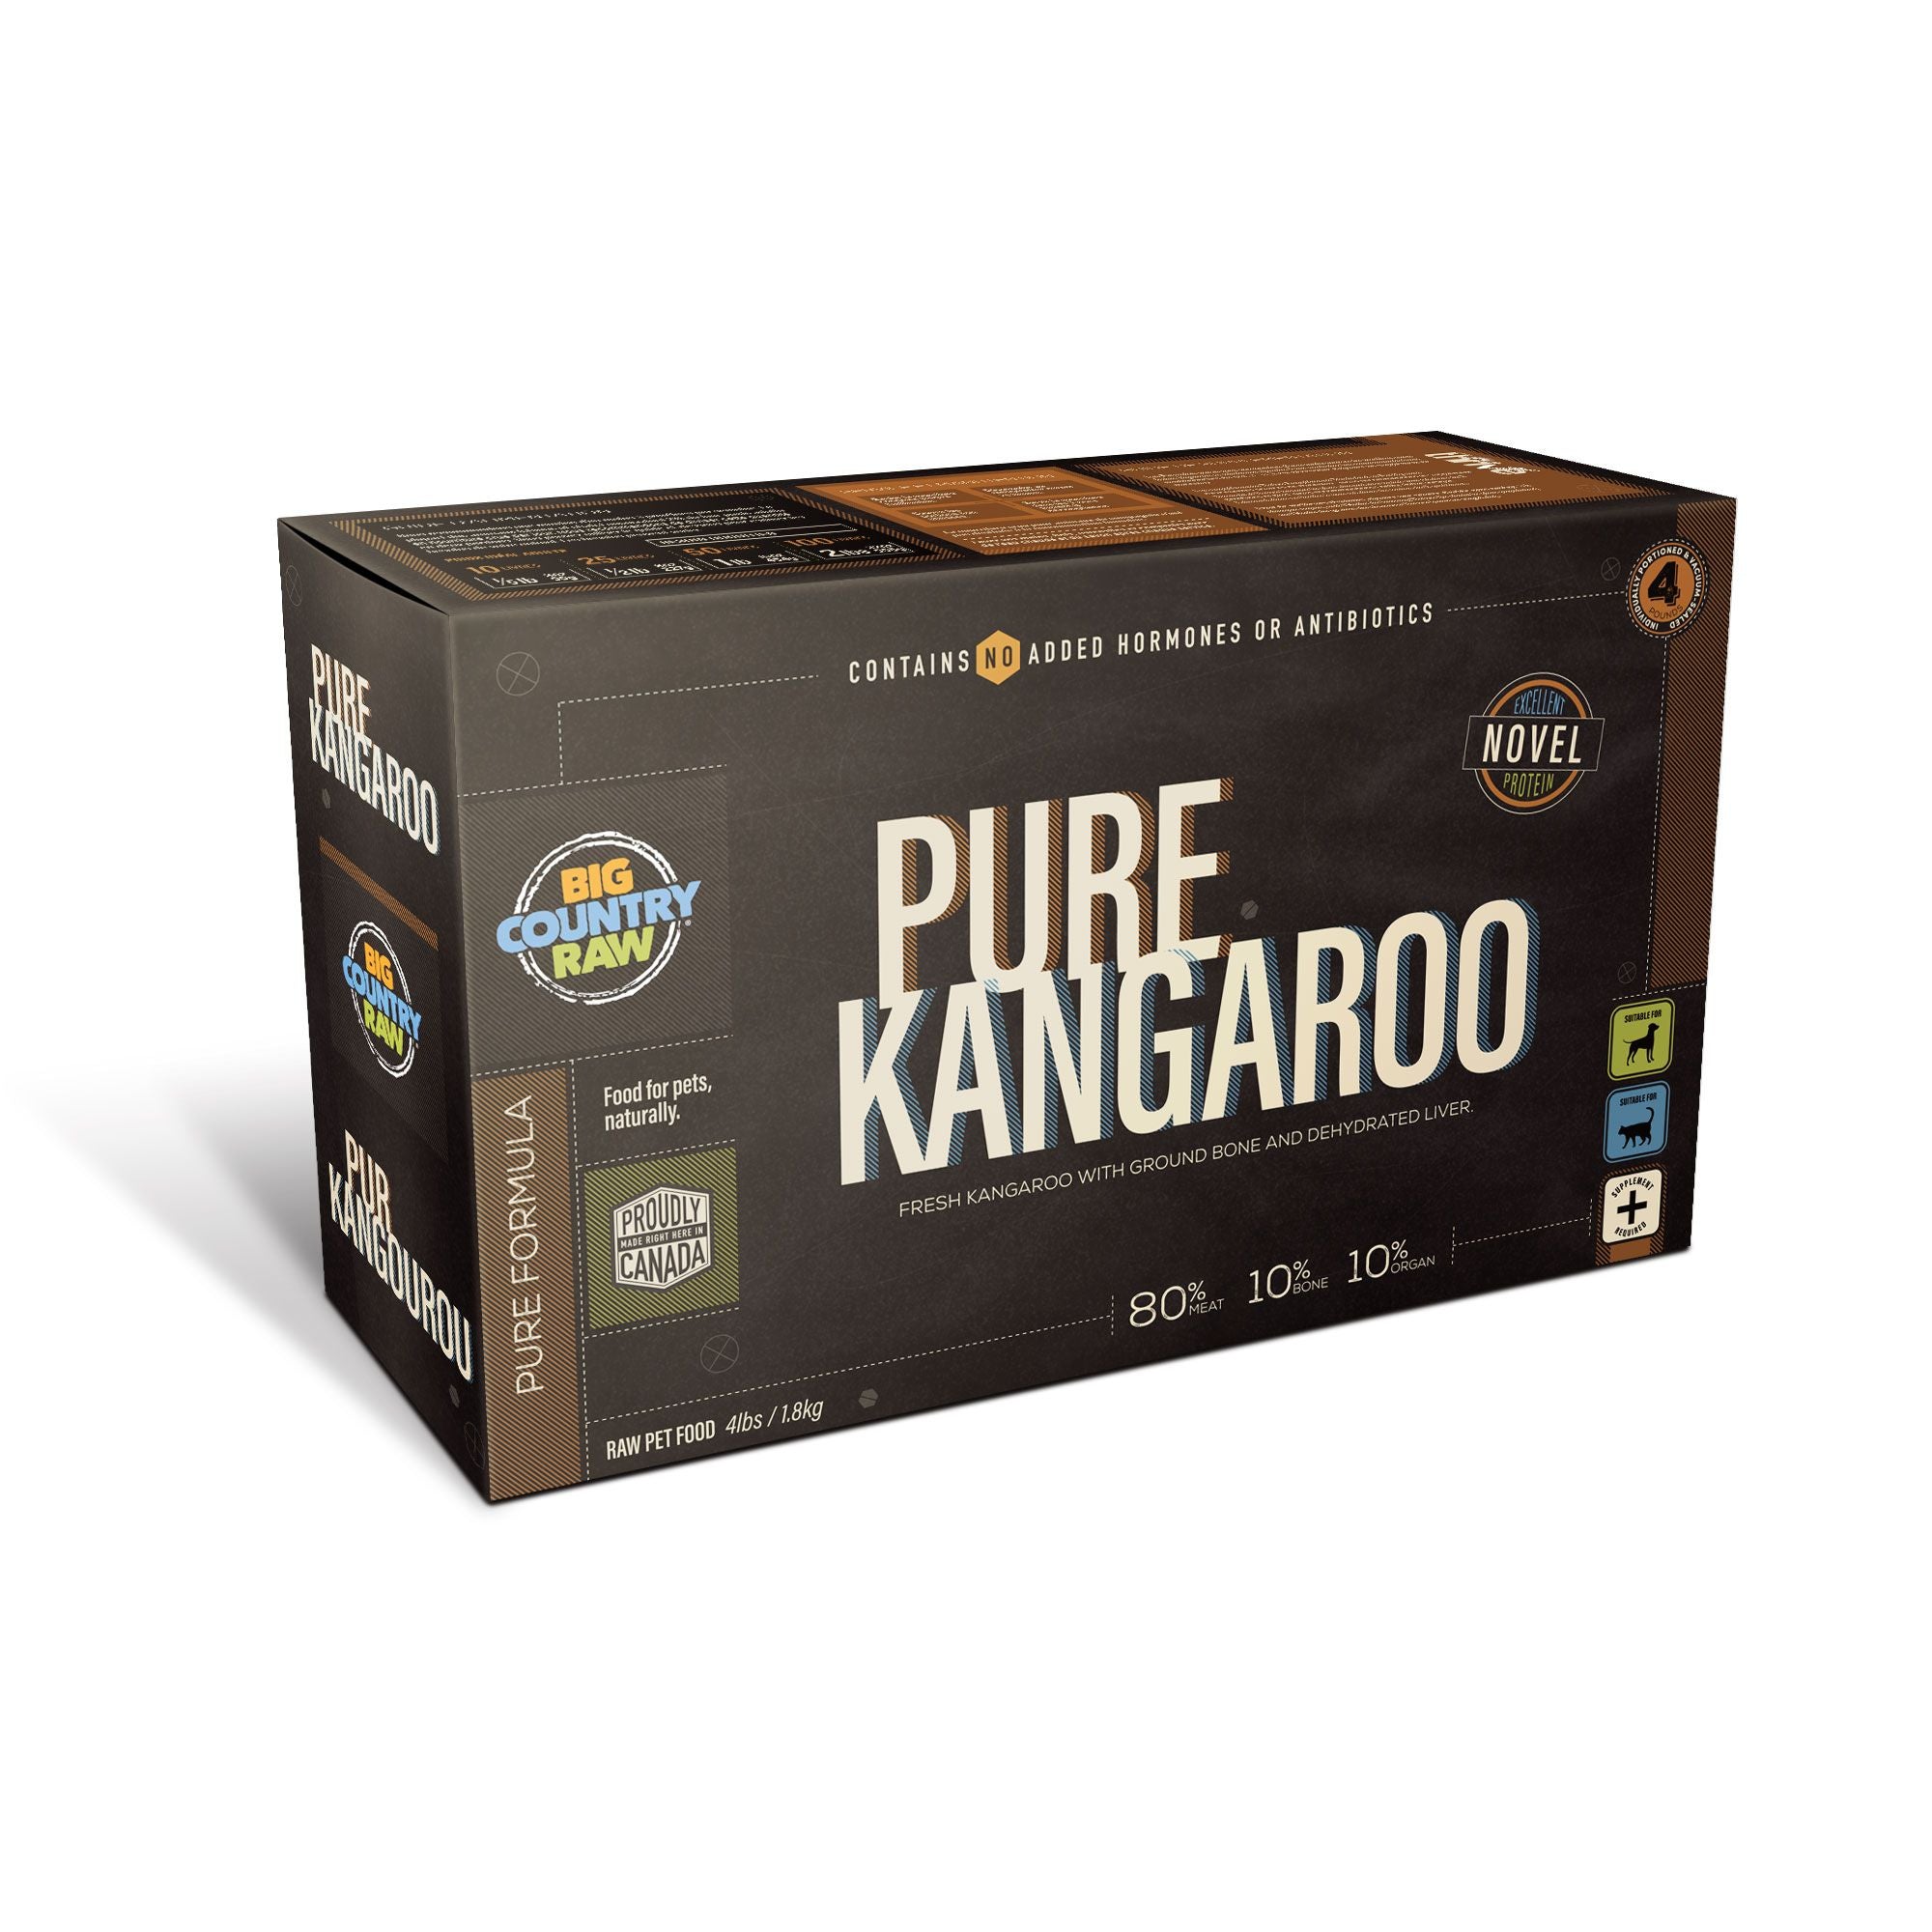 Big Country Raw - Pure Kangaroo Carton (4lb) - Frozen Product